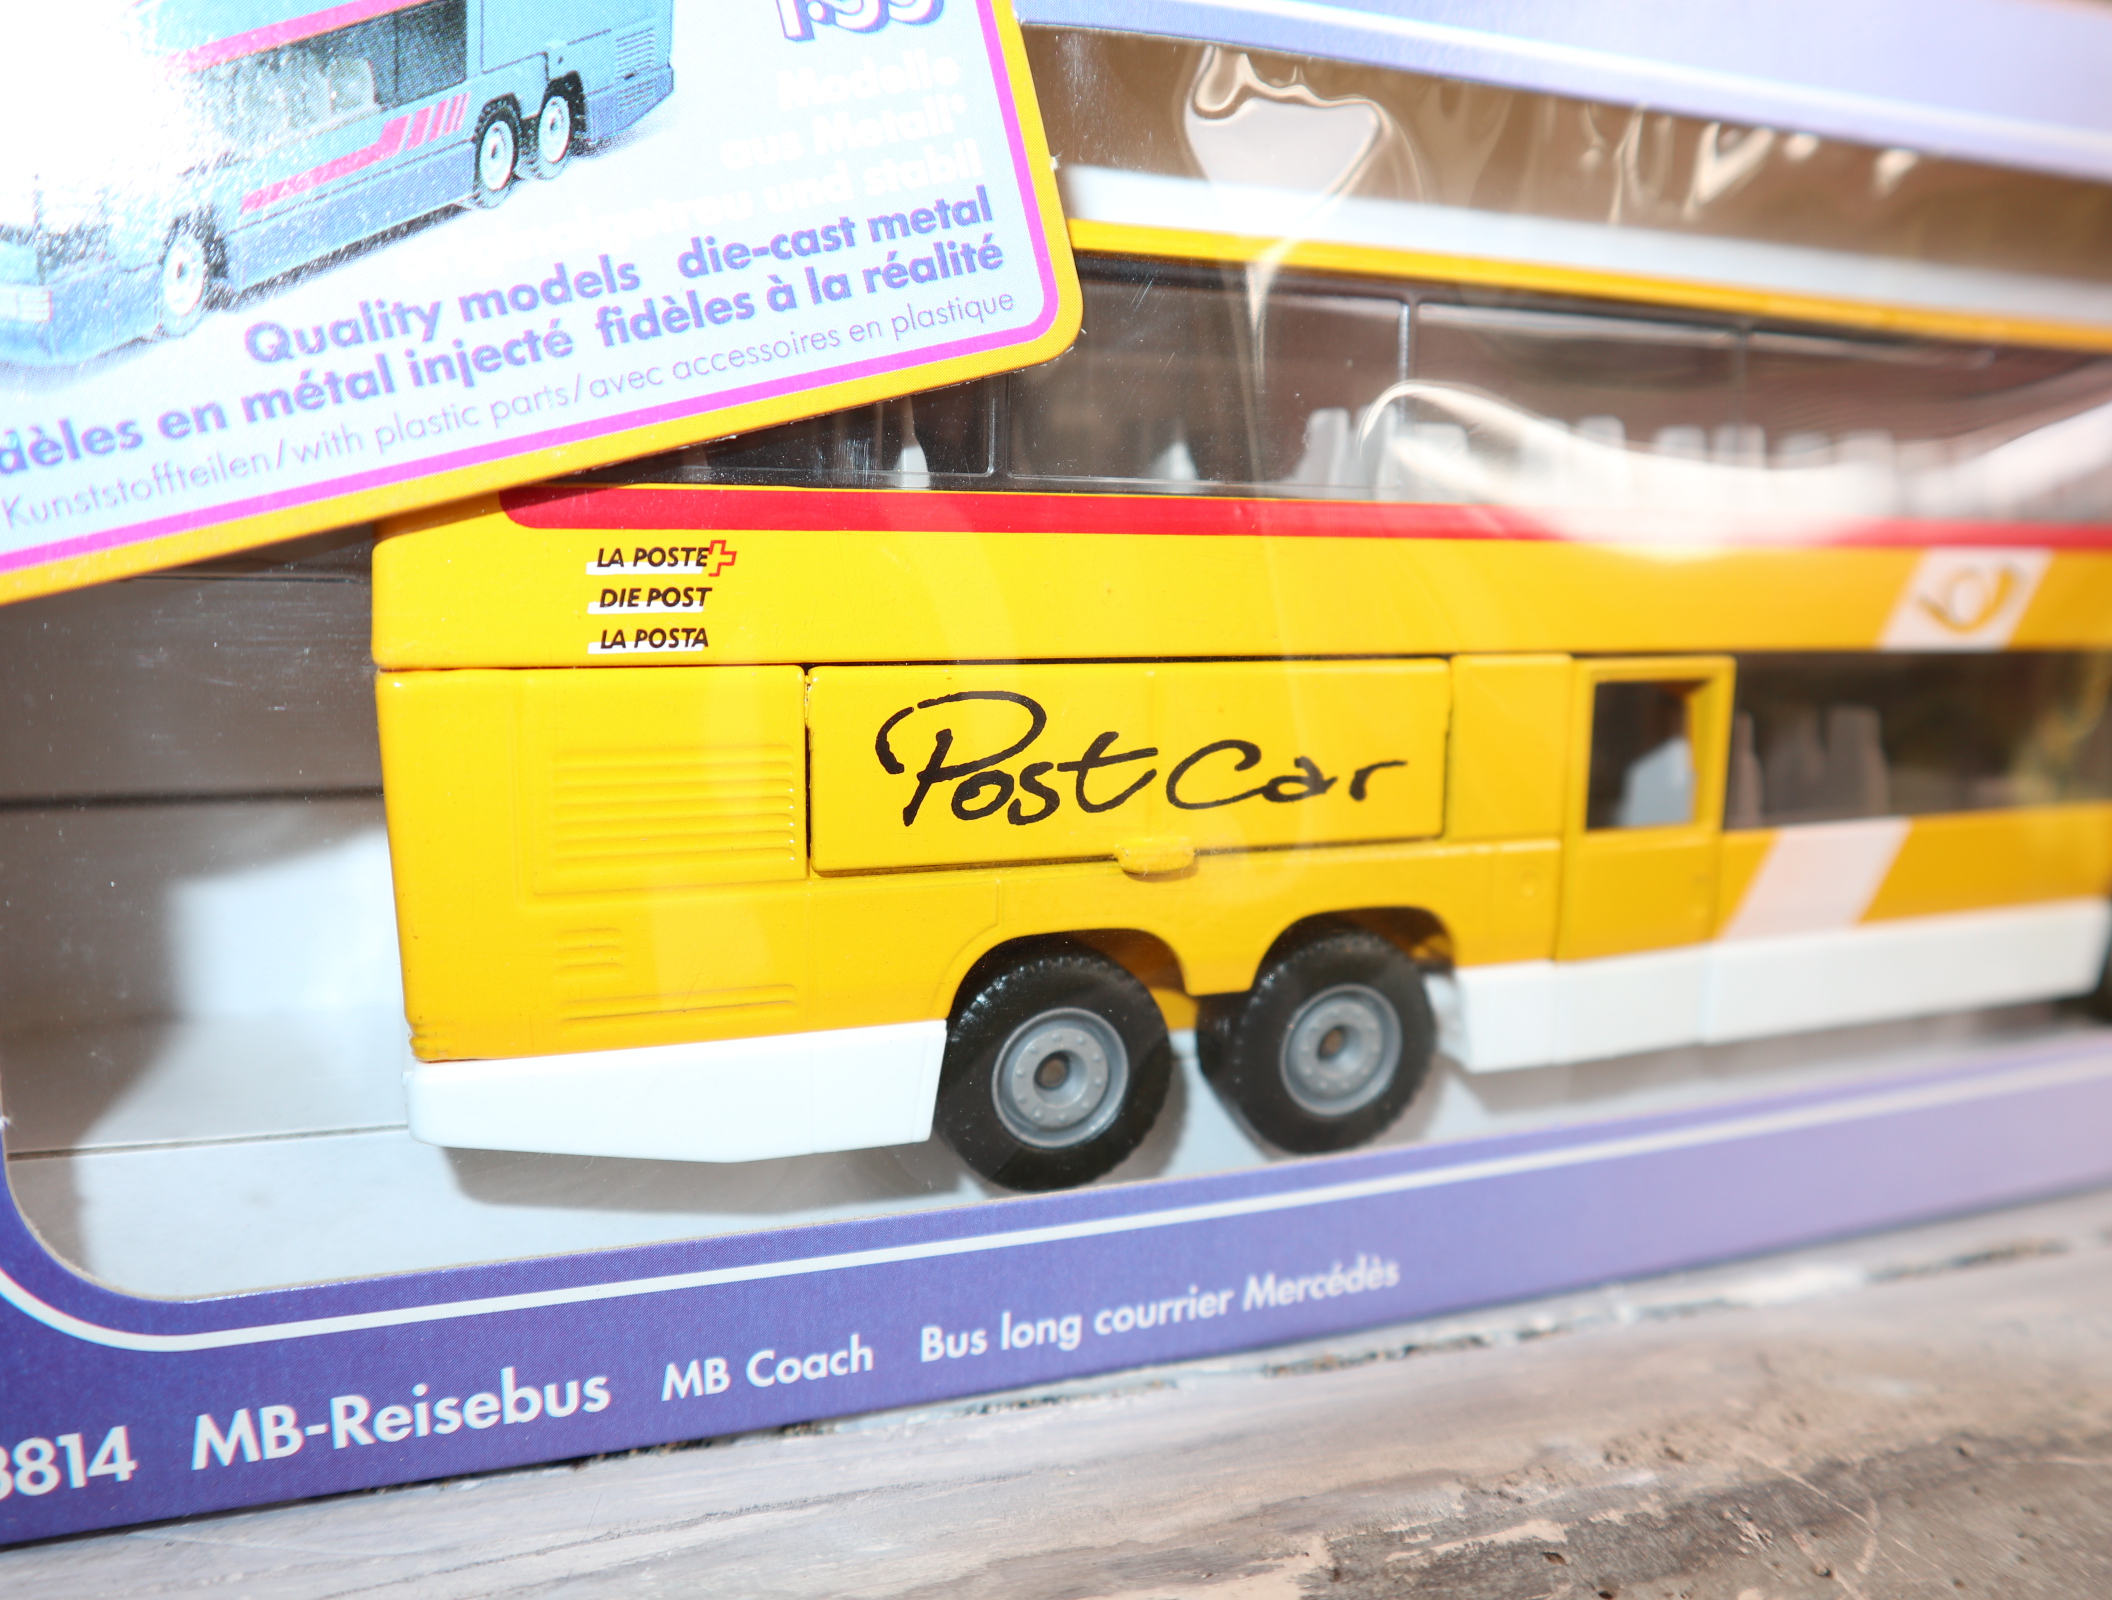 Siku 3814 in 1:55 MB-Reisebus Sondermodell Schweiz "PostCar"